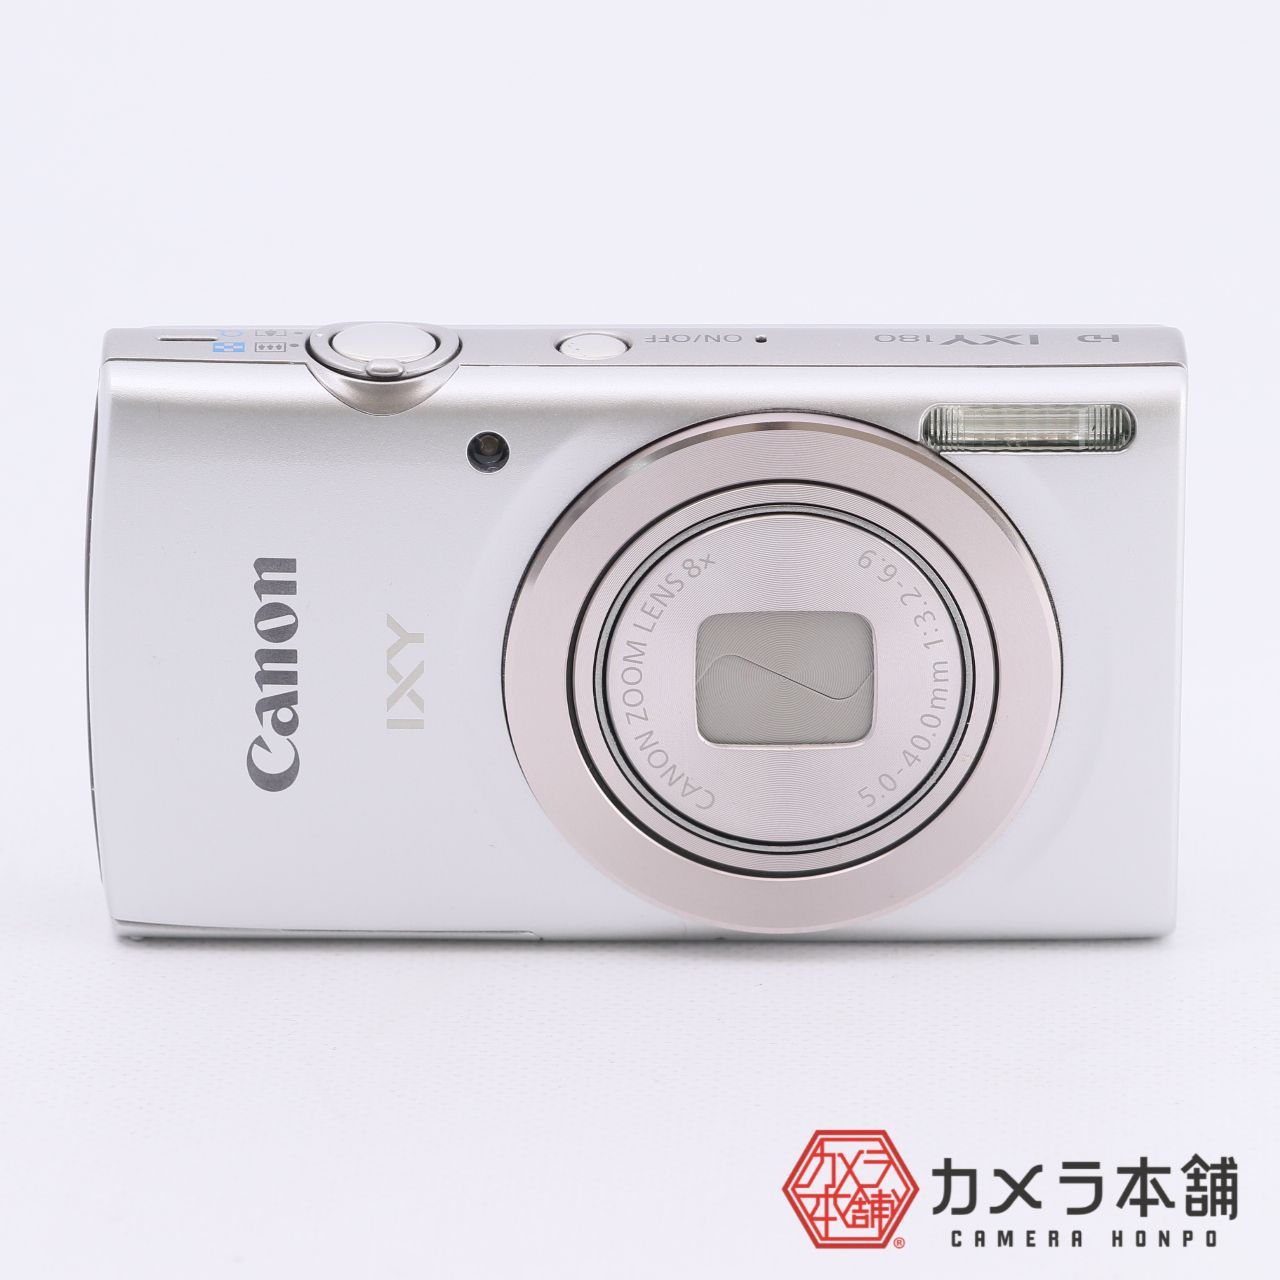 Canon IXY 180 シルバー デジカメ デジタルカメラ - デジタルカメラ